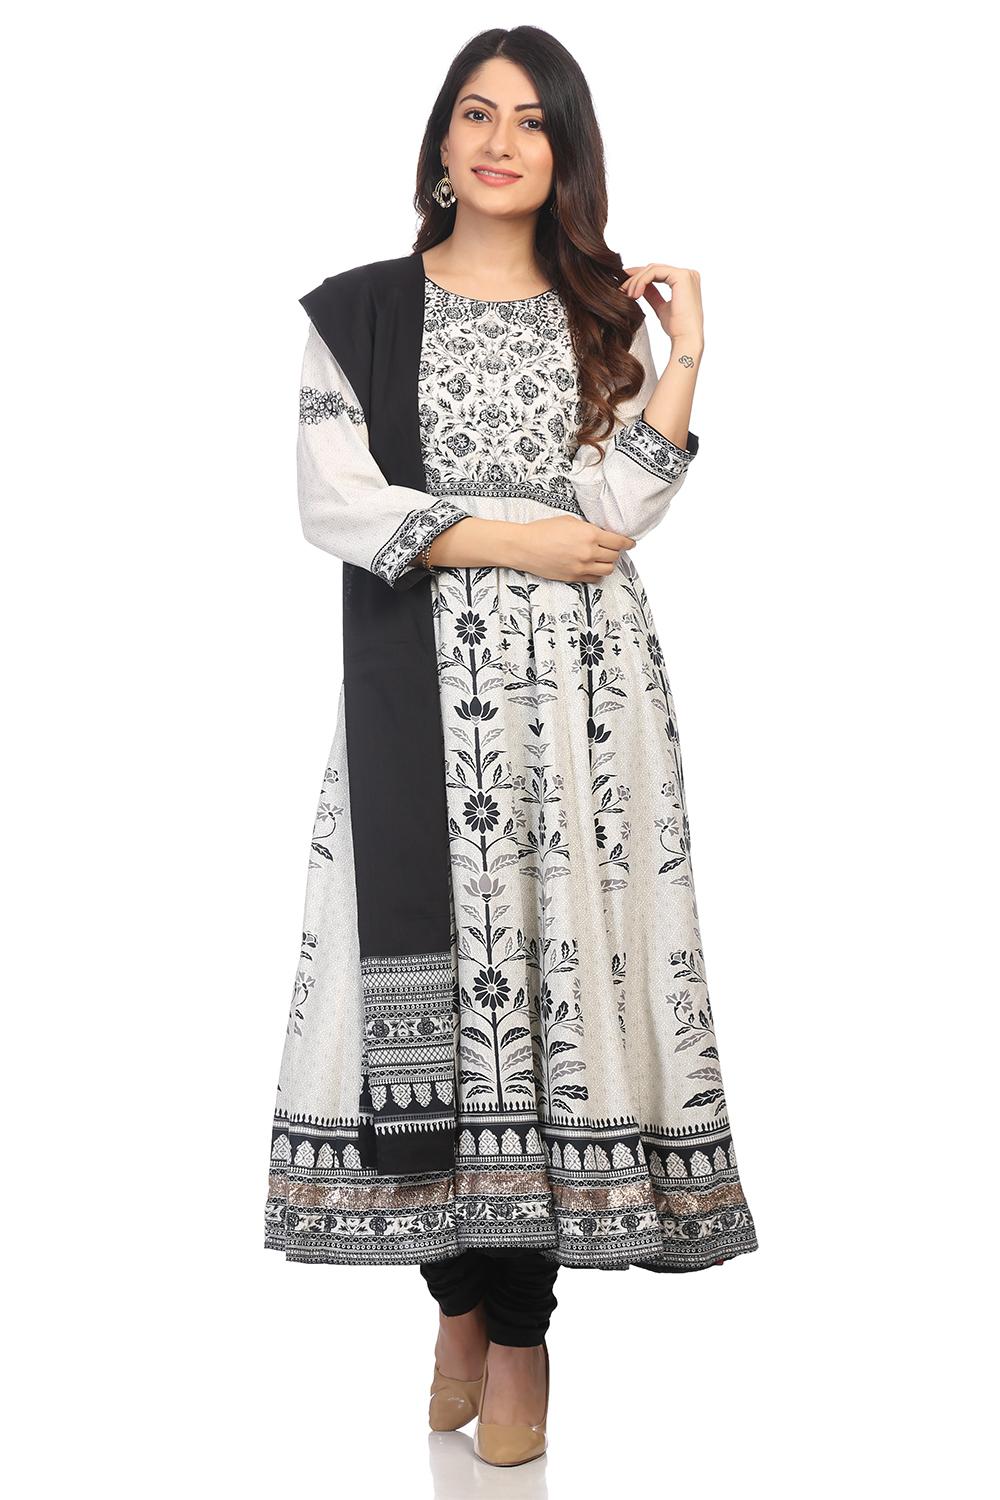 Buy Online Off White Viscose Anarkali Suit Set for Women & Girls at ...